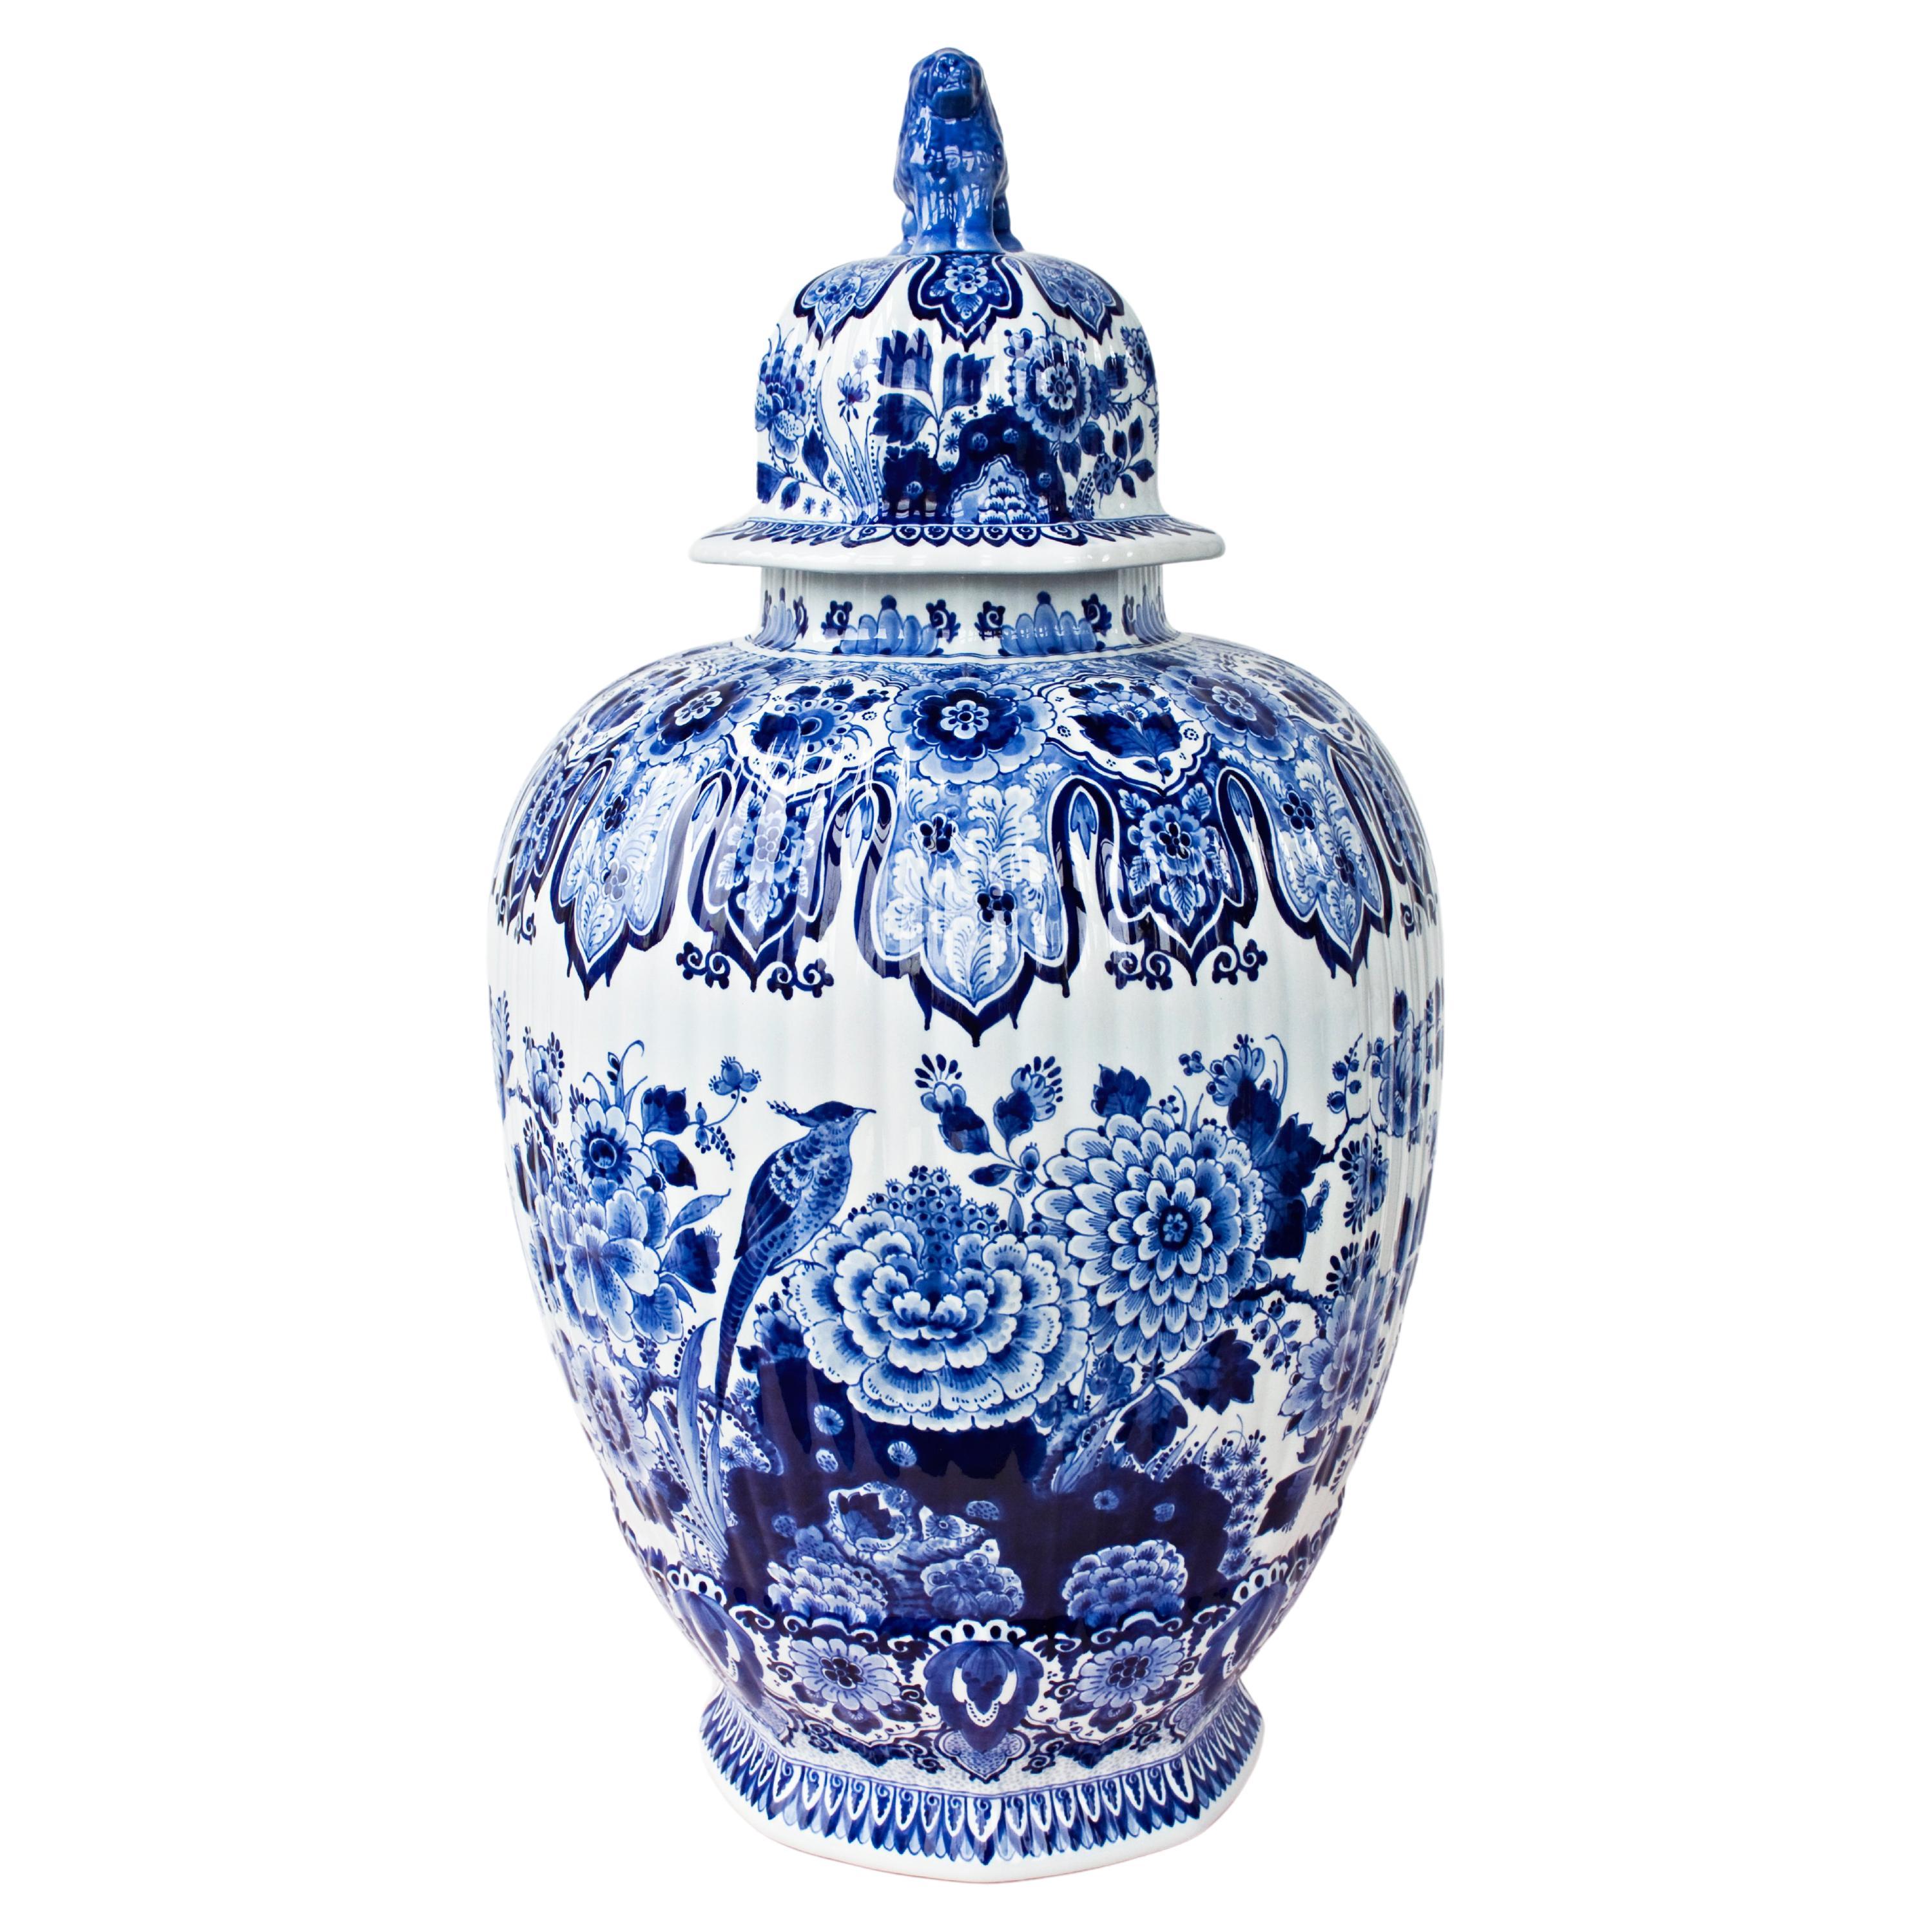 Dutch Delft Blue handpainted ceramic Jar with lid by Royal Delft, Original Blue 